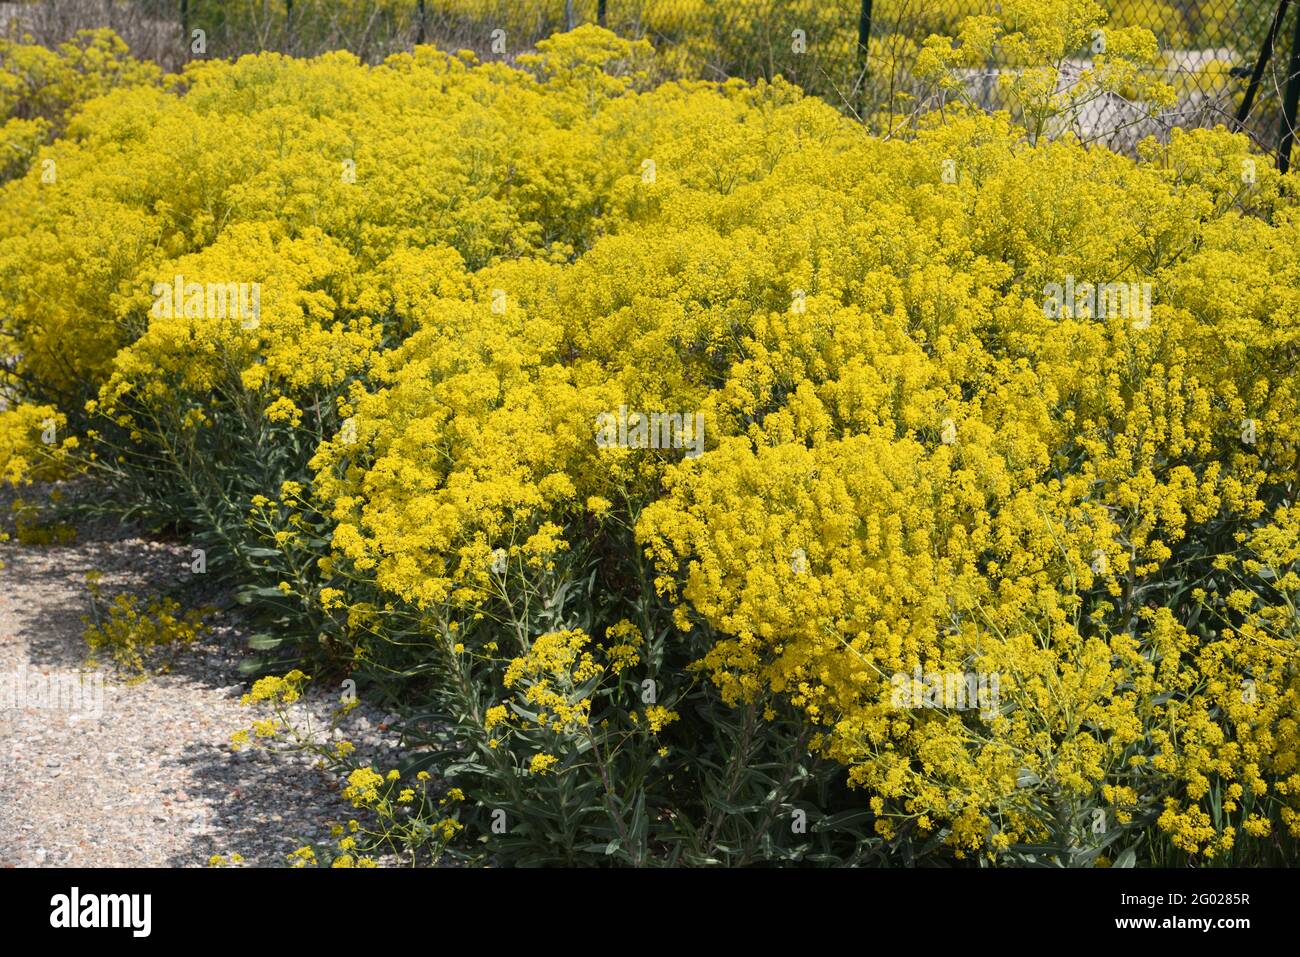 Mass of Flowering Common Ragwort, Jacobaea vulgaris syn Senecio jacobaea, aka Stinking Willie or Tansy Ragwort Growing on Waste Land or Wasteland Stock Photo